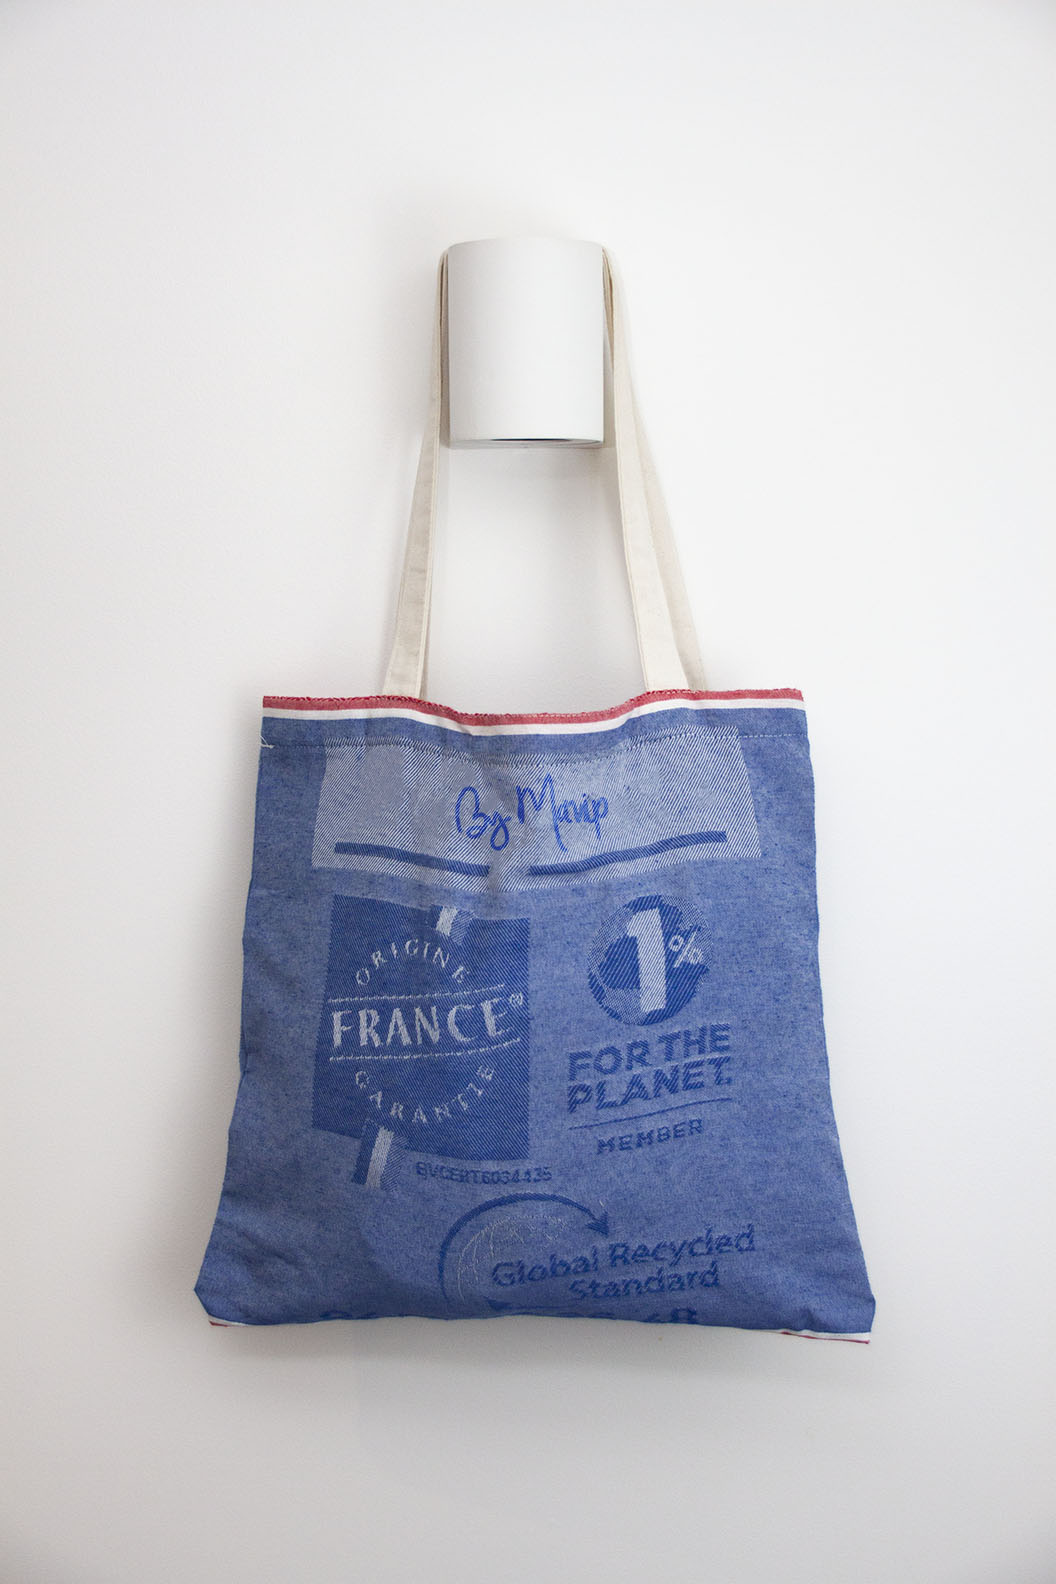 Sac recyclé made in France personnalisable avec logo d'entreprise